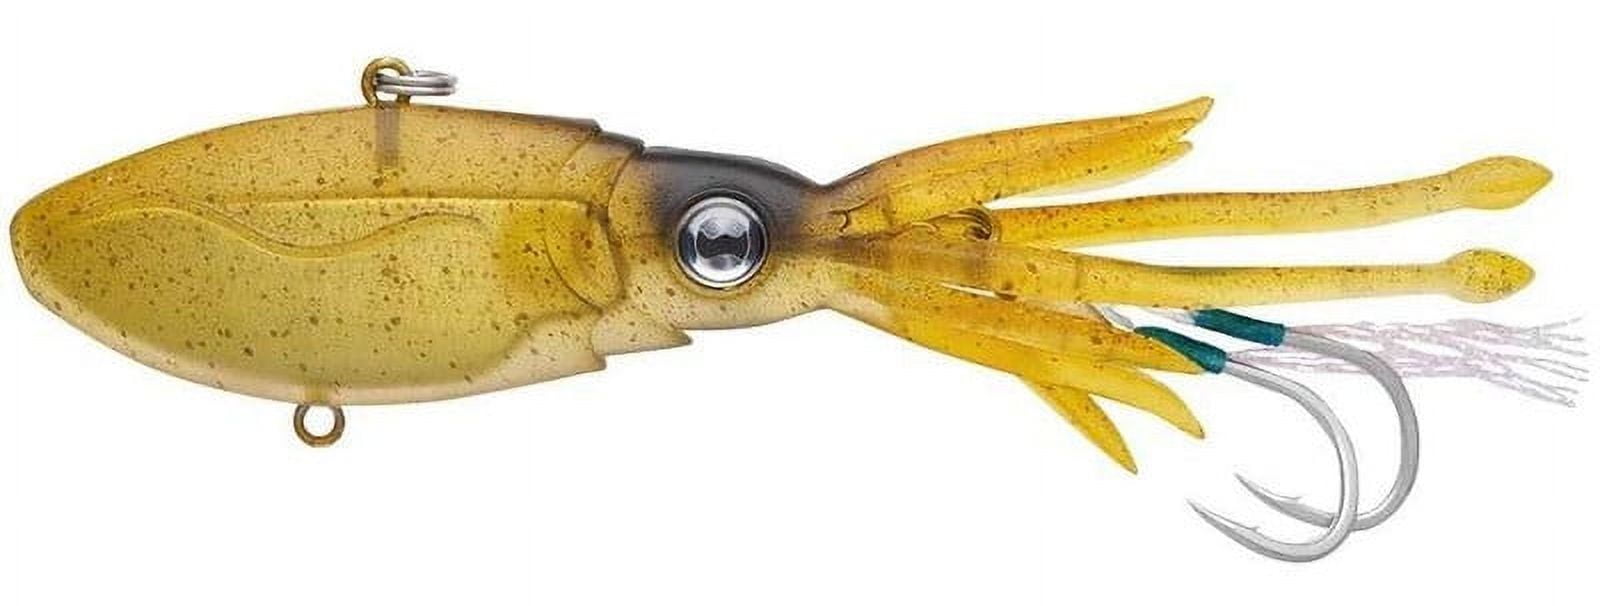 Nomad Design Squidtrex Mini Squid Lure - 55mm, Green Gold Gizzy, 2 